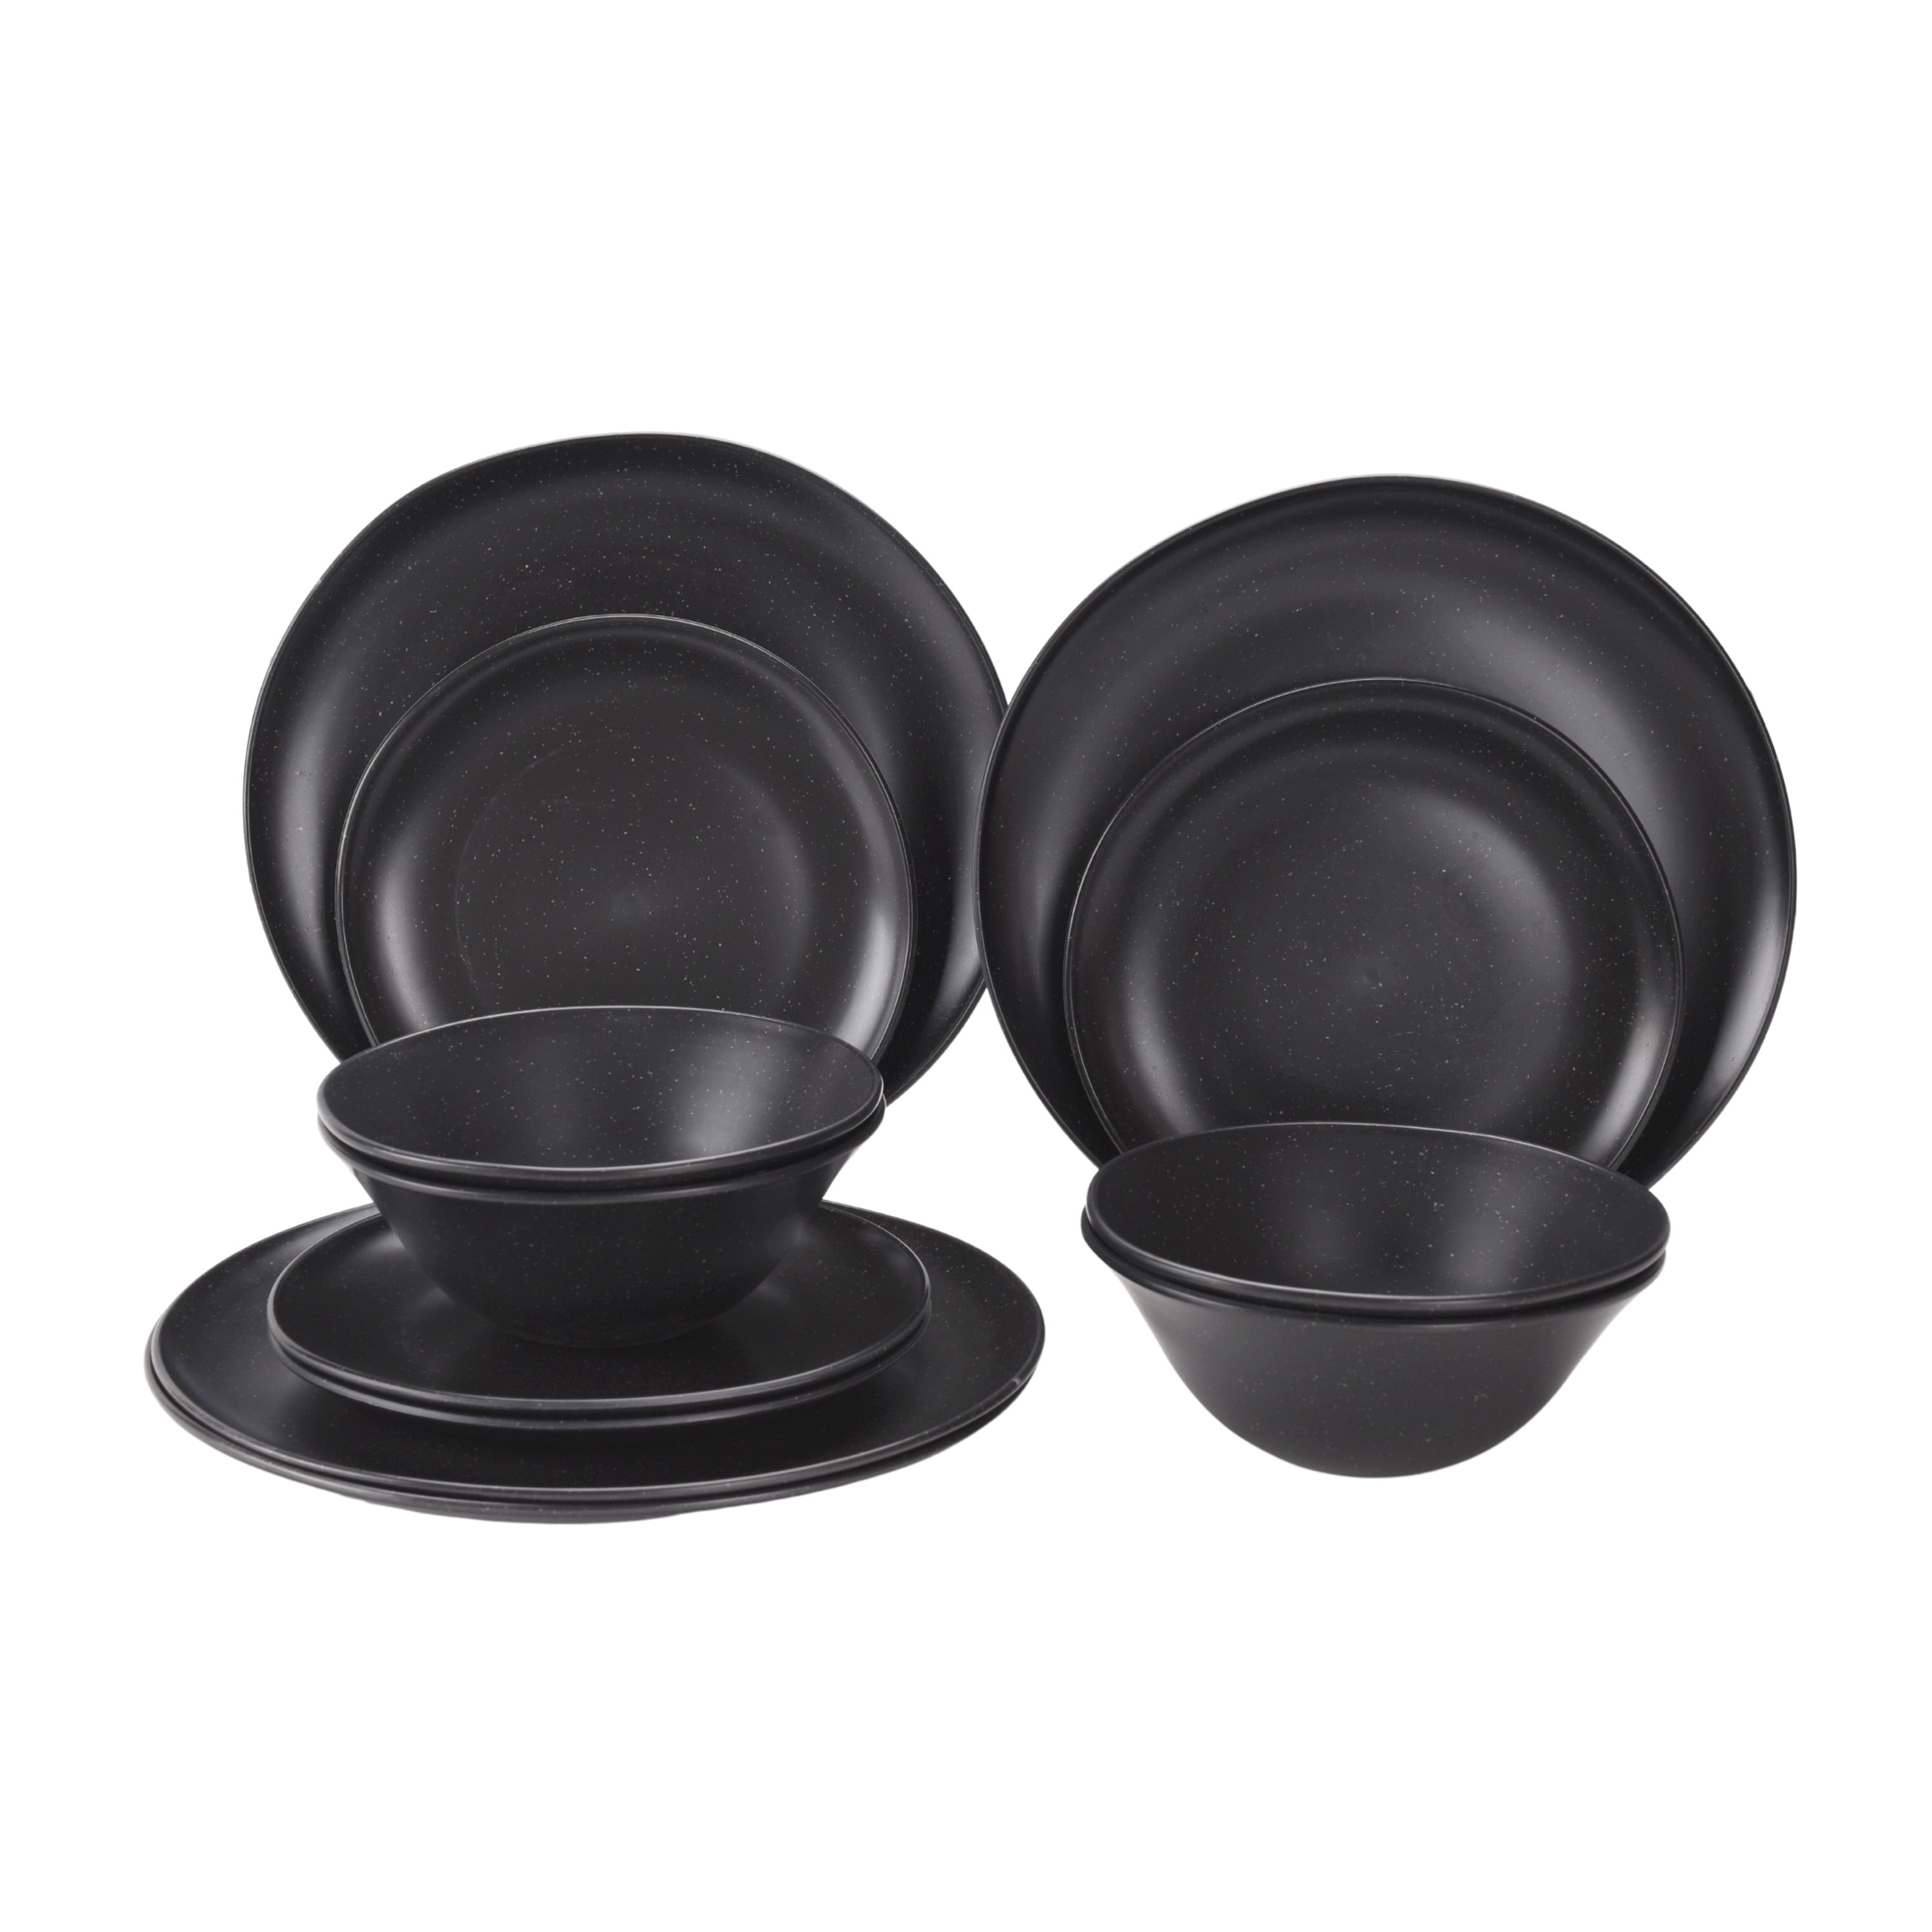 Mainstays 12-Piece Eco-Friendly Dinnerware Set, Black